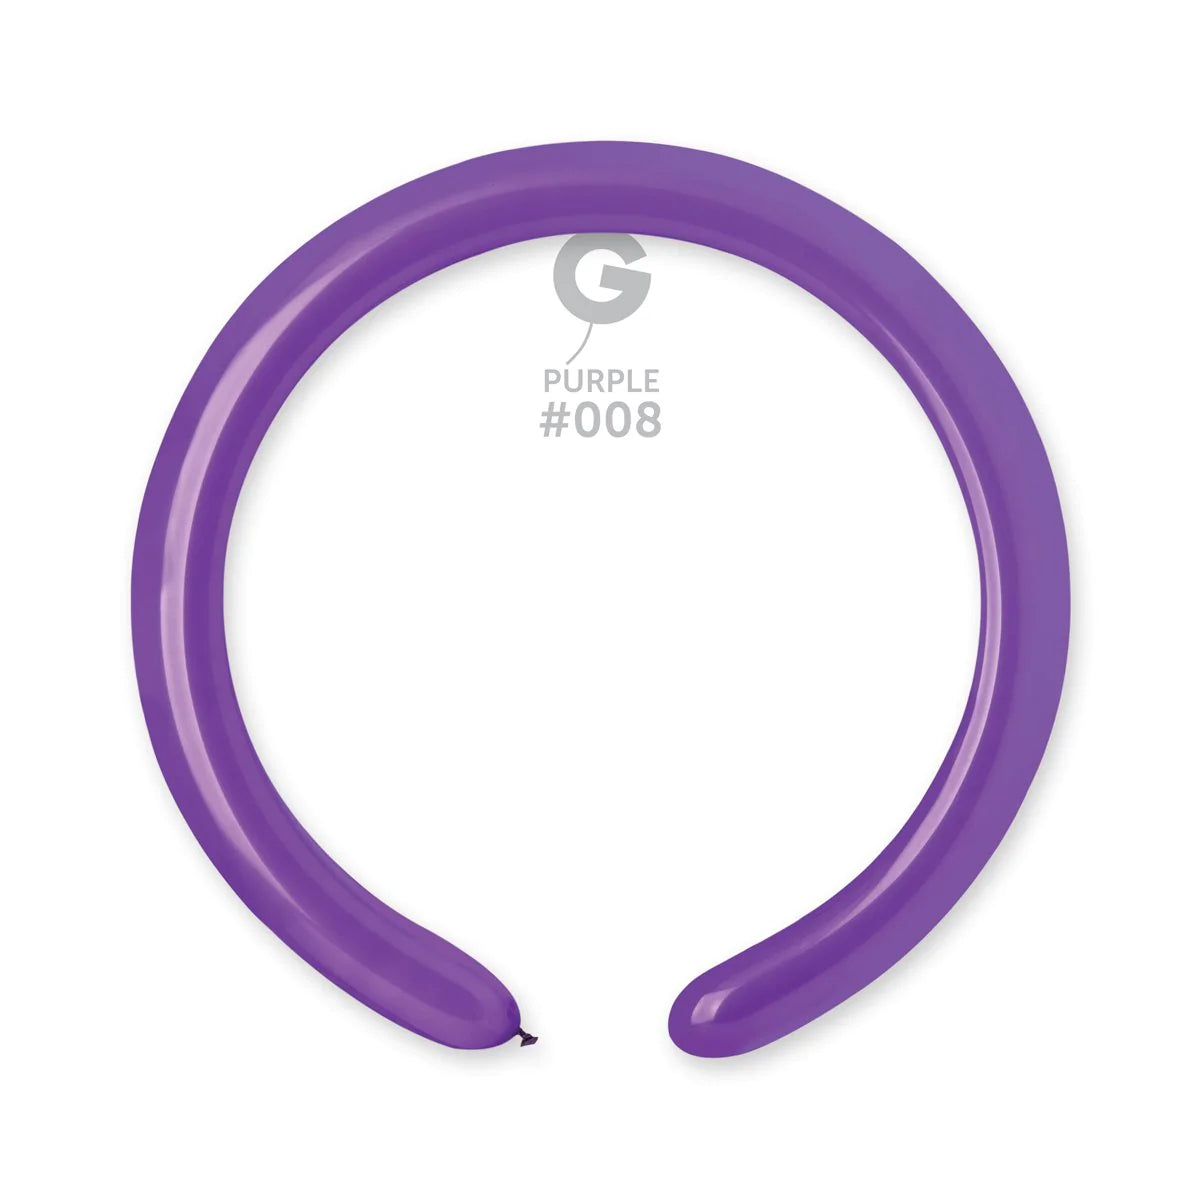 Solid Balloons Purple Gemar #008 size 5" 12" 19" 31"